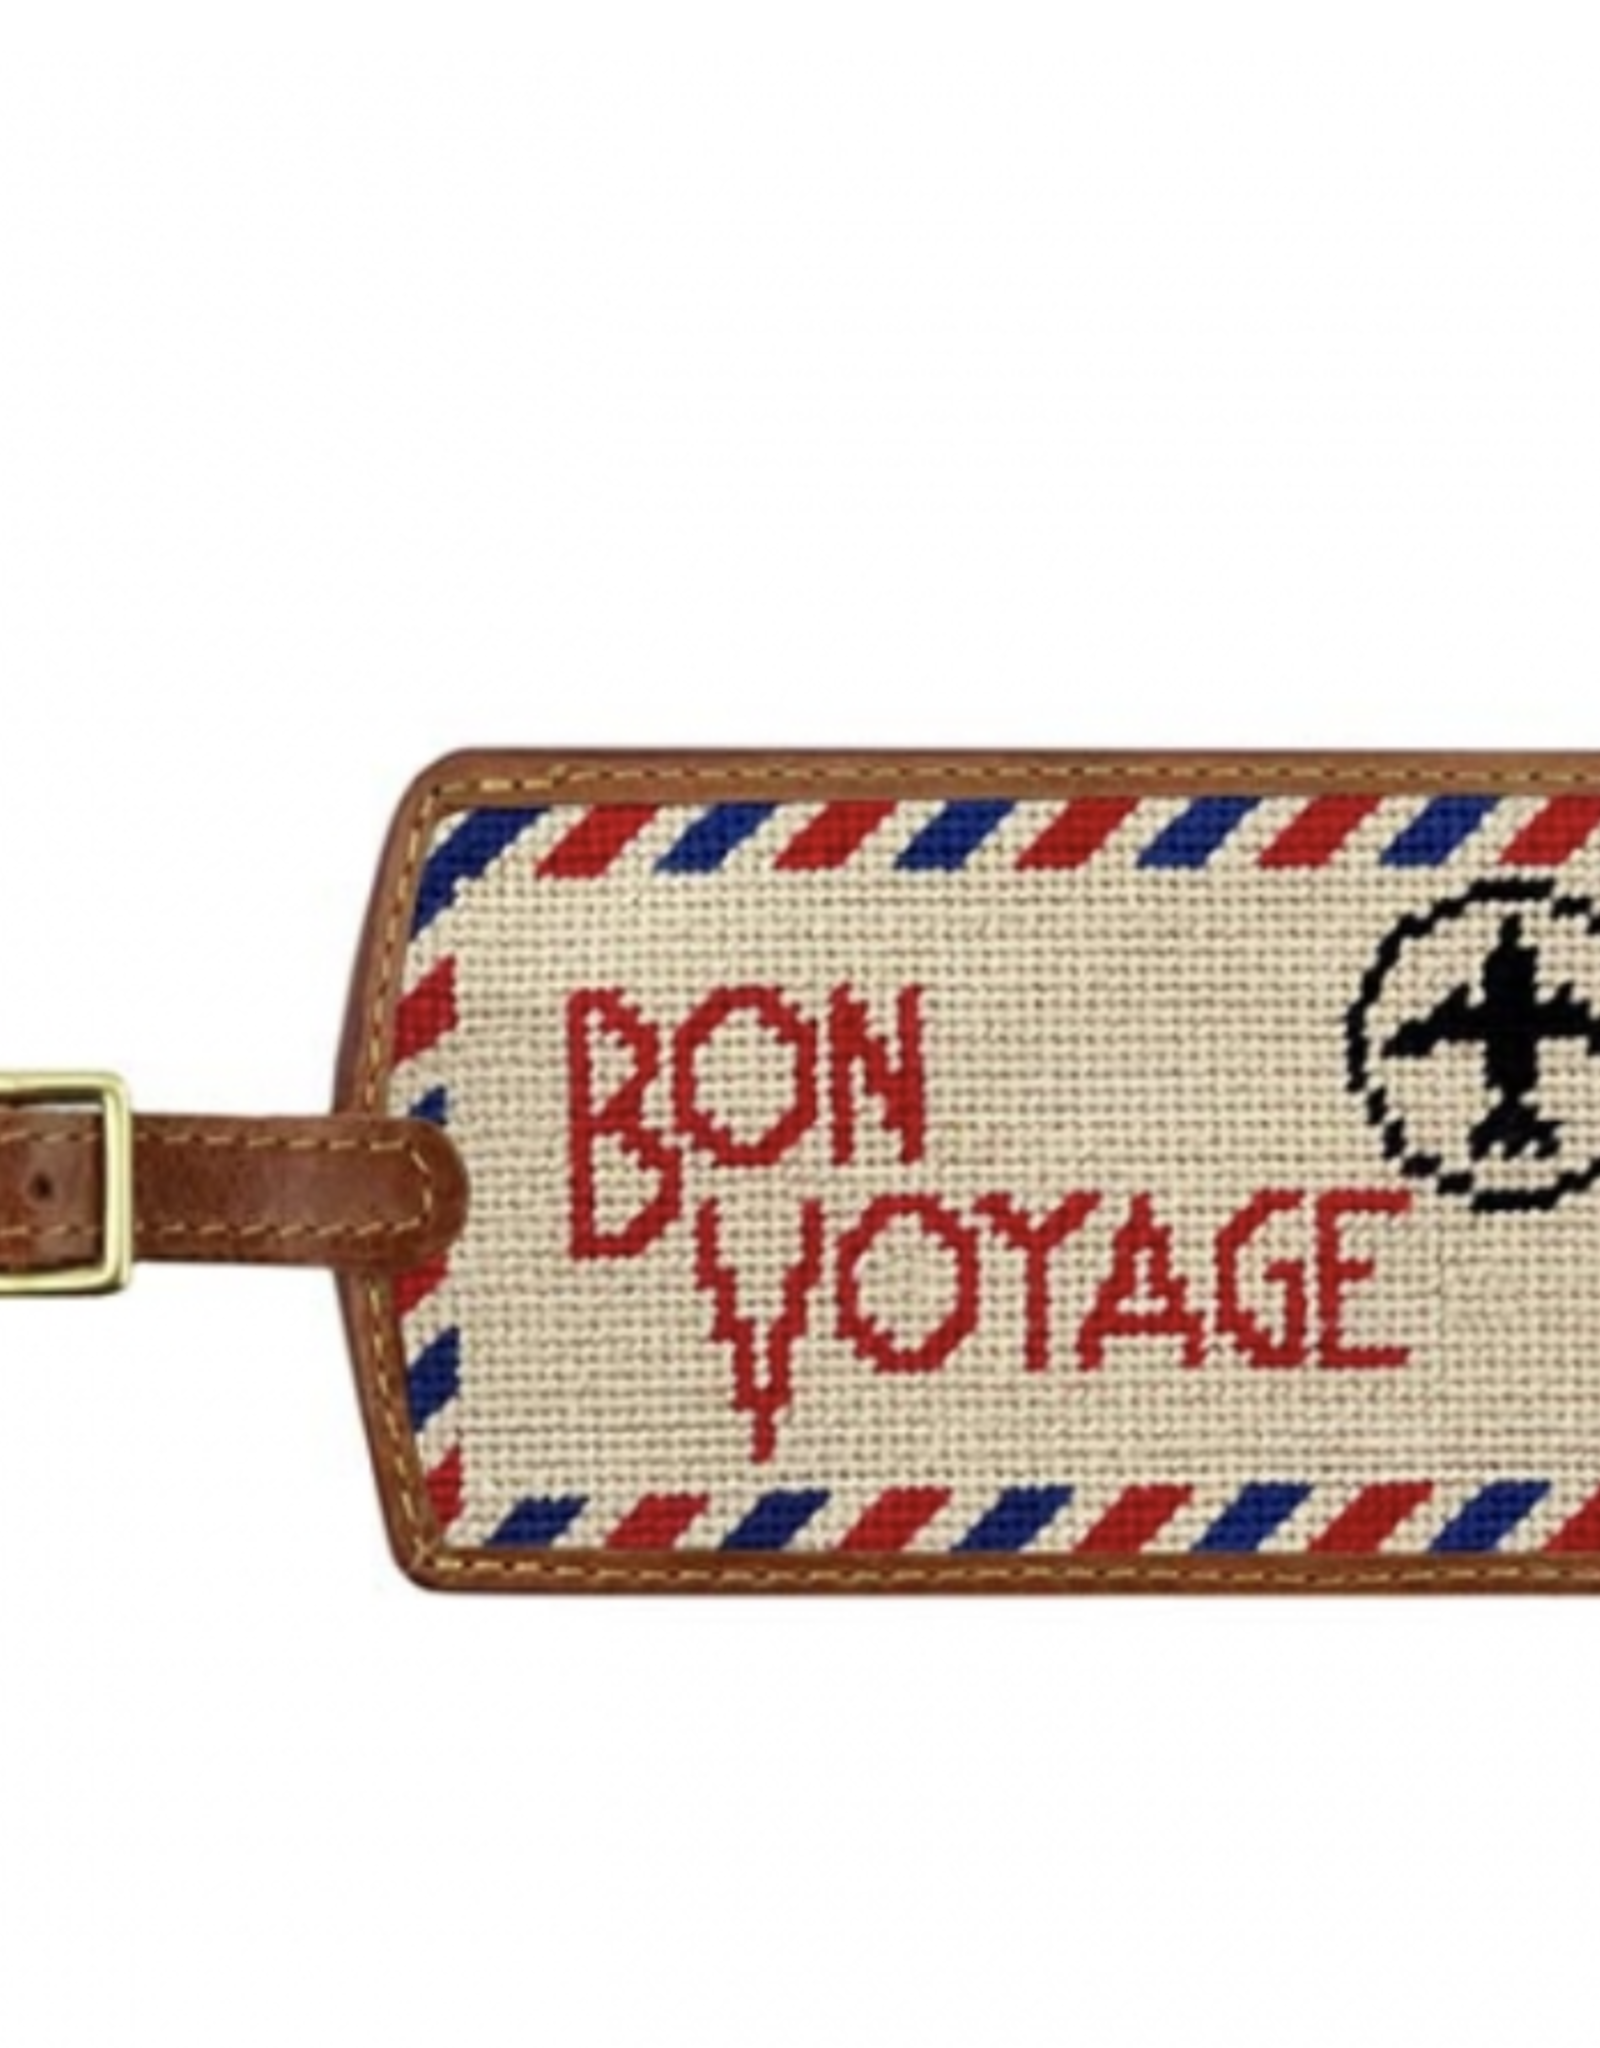 Smathers & Branson Smather's & Branson Luggage Tag Bon Voyage